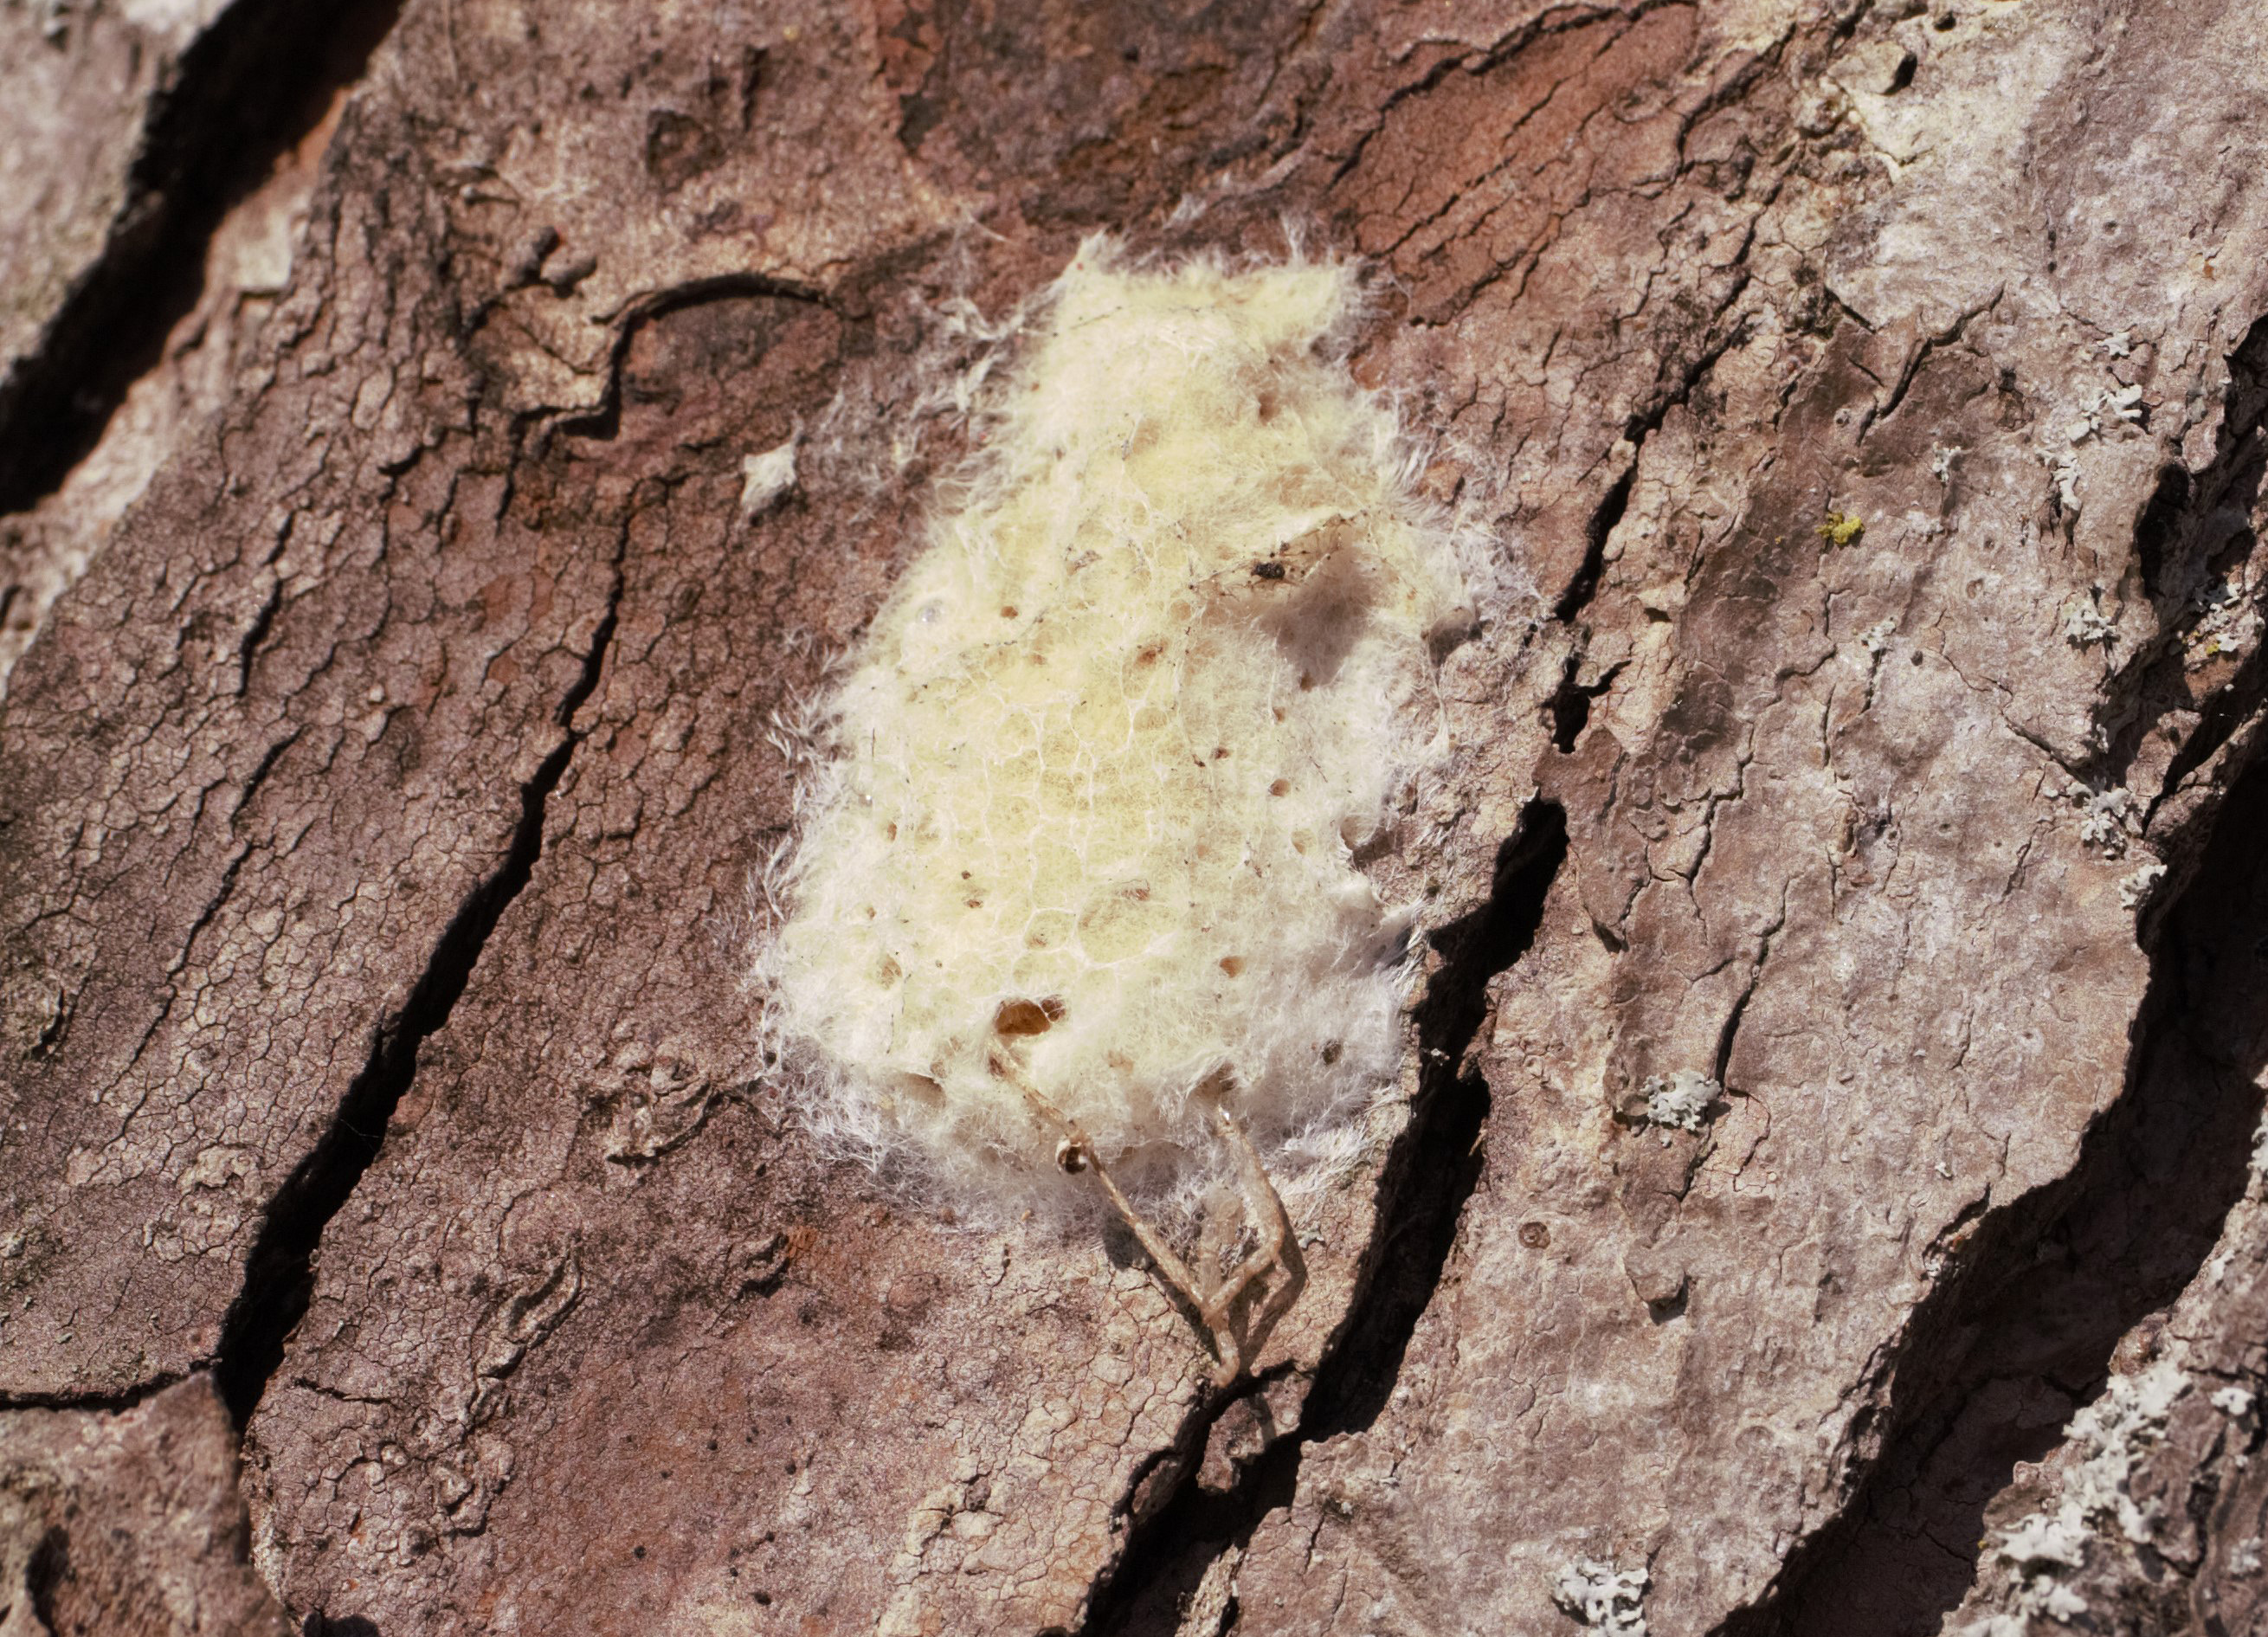 gypsy moth egg mass